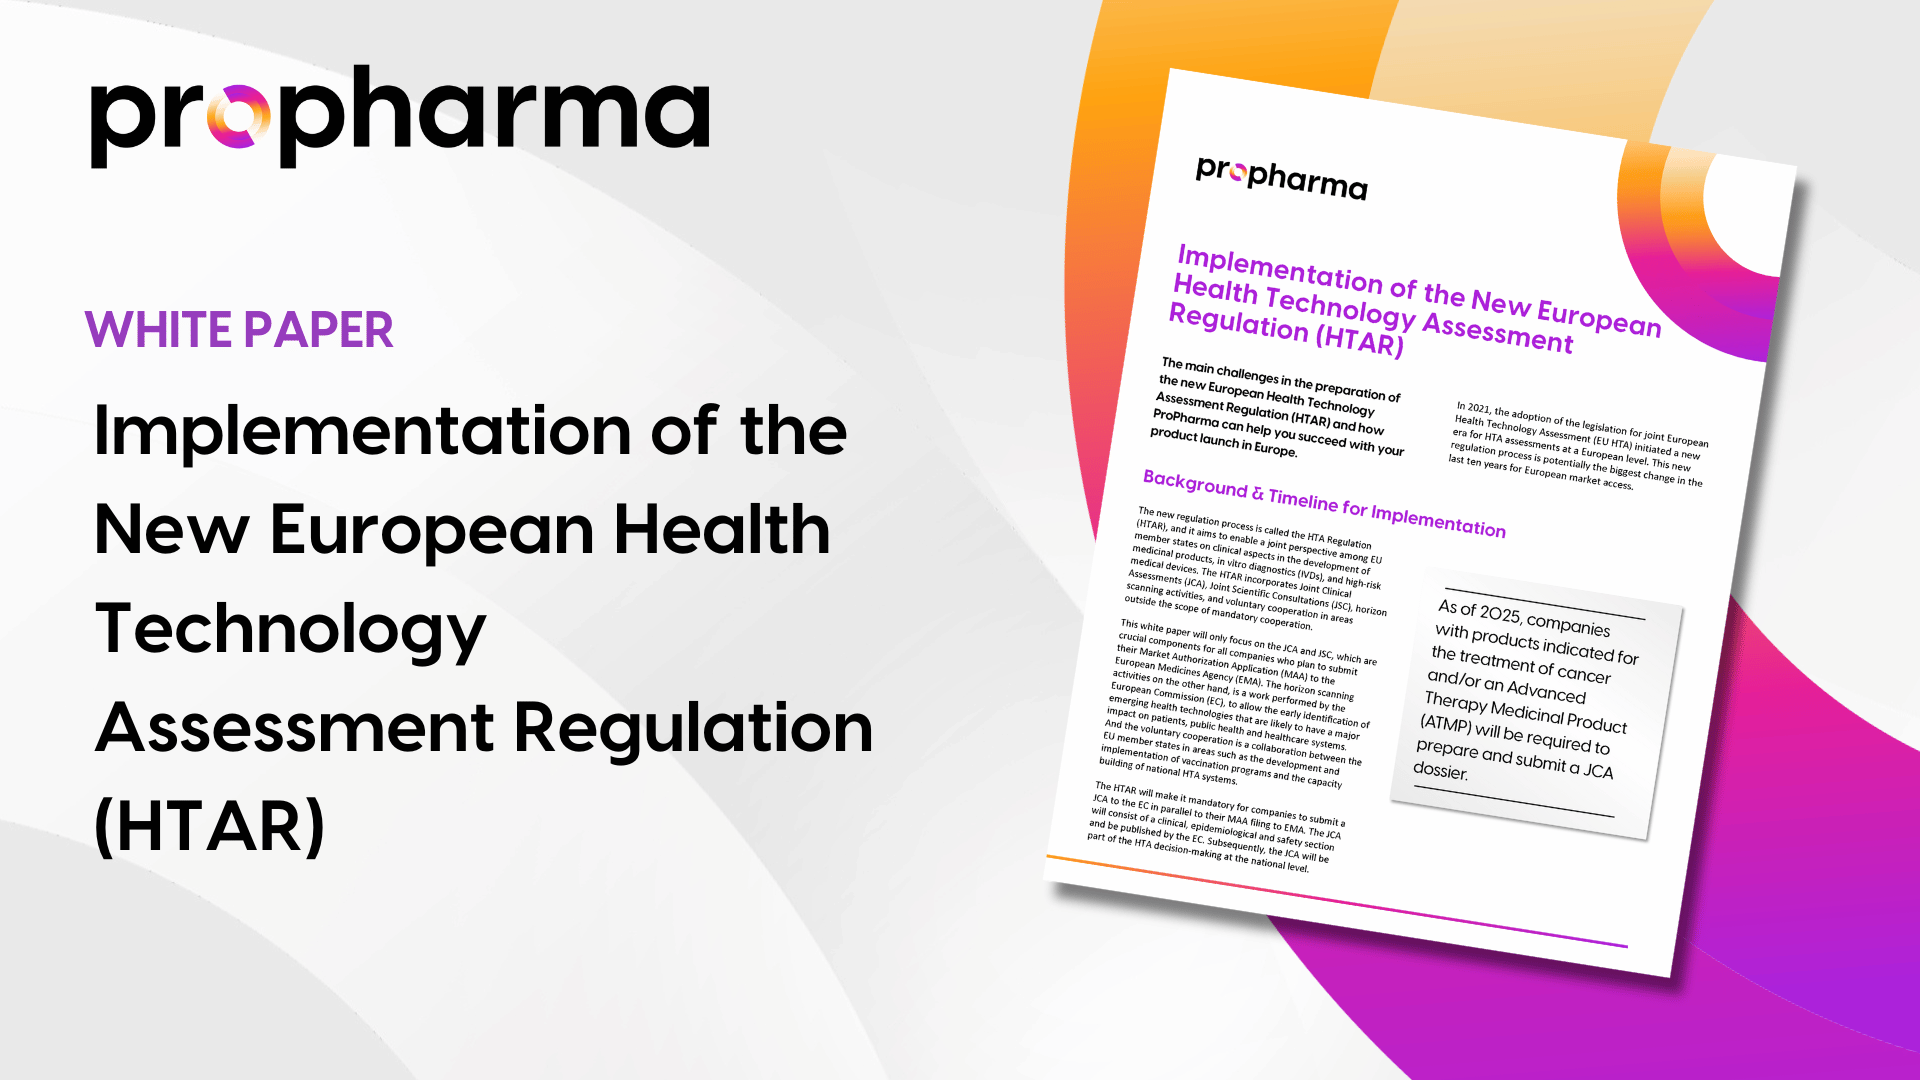 Implementation of the New European Health Technology Assessment Regulation (HTAR)